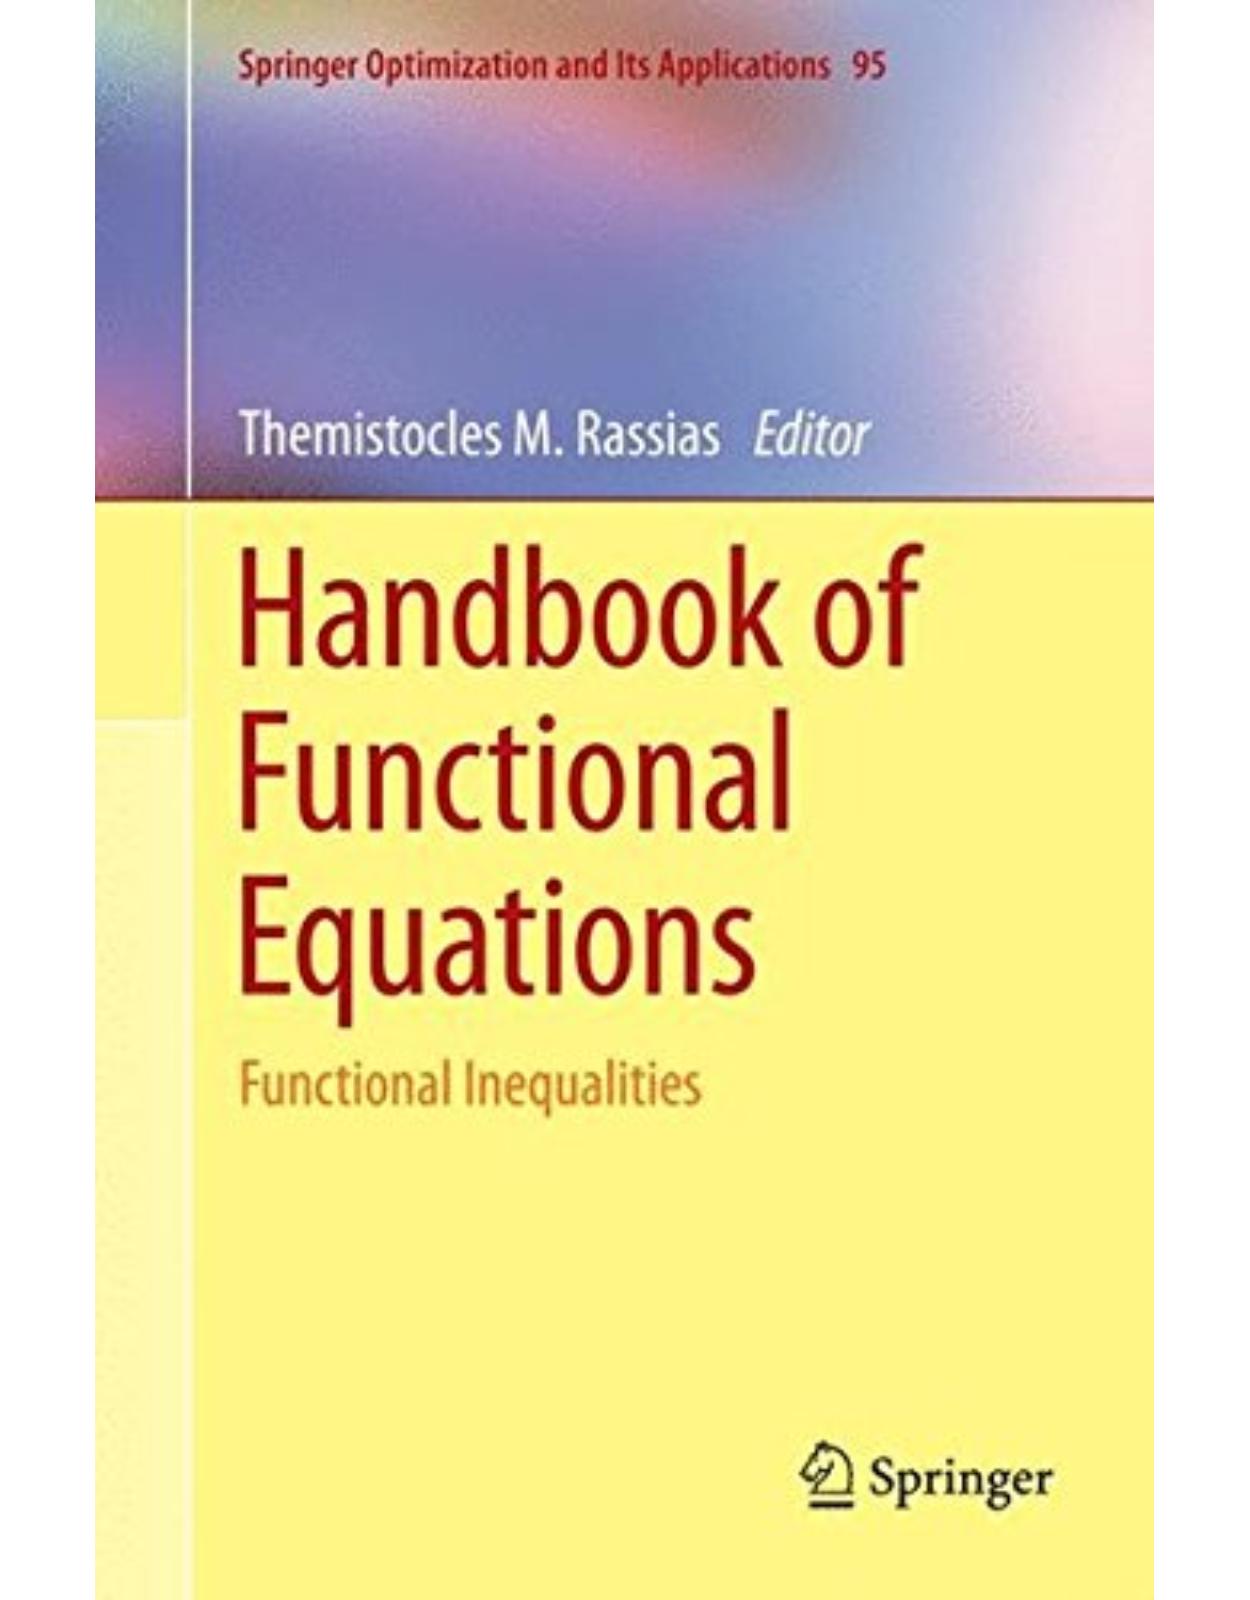 Handbook of Functional Equations: Functional Inequalities